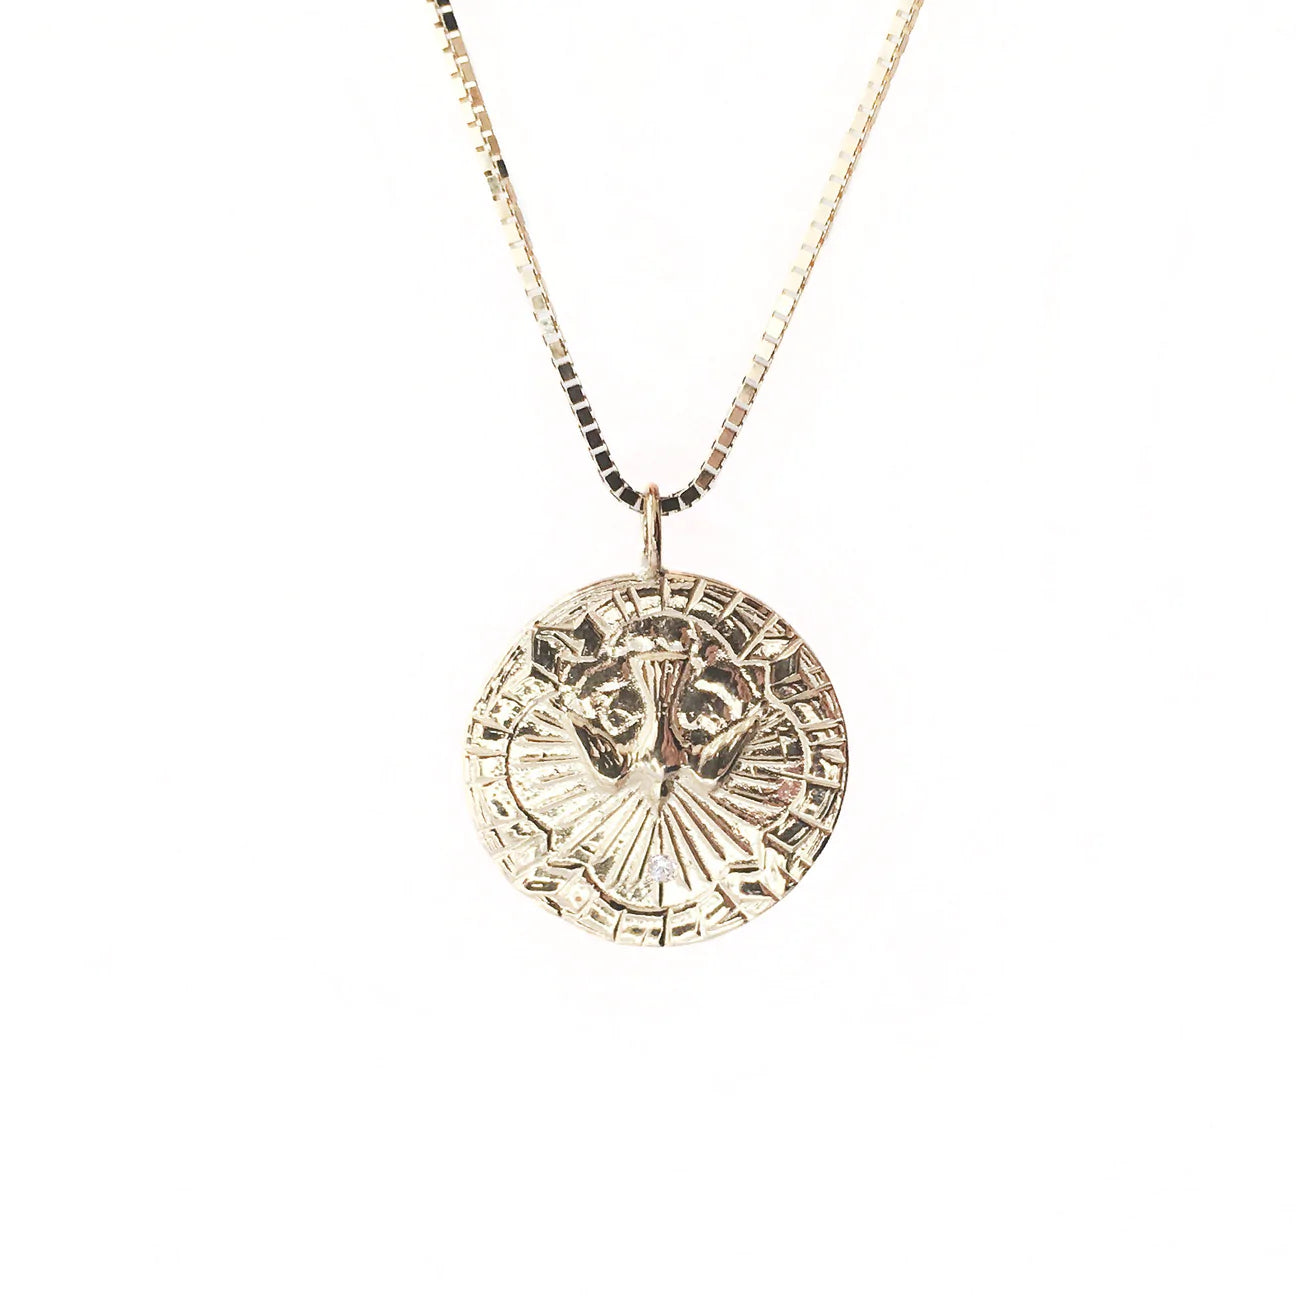 spirit dove medallion necklace - made to order